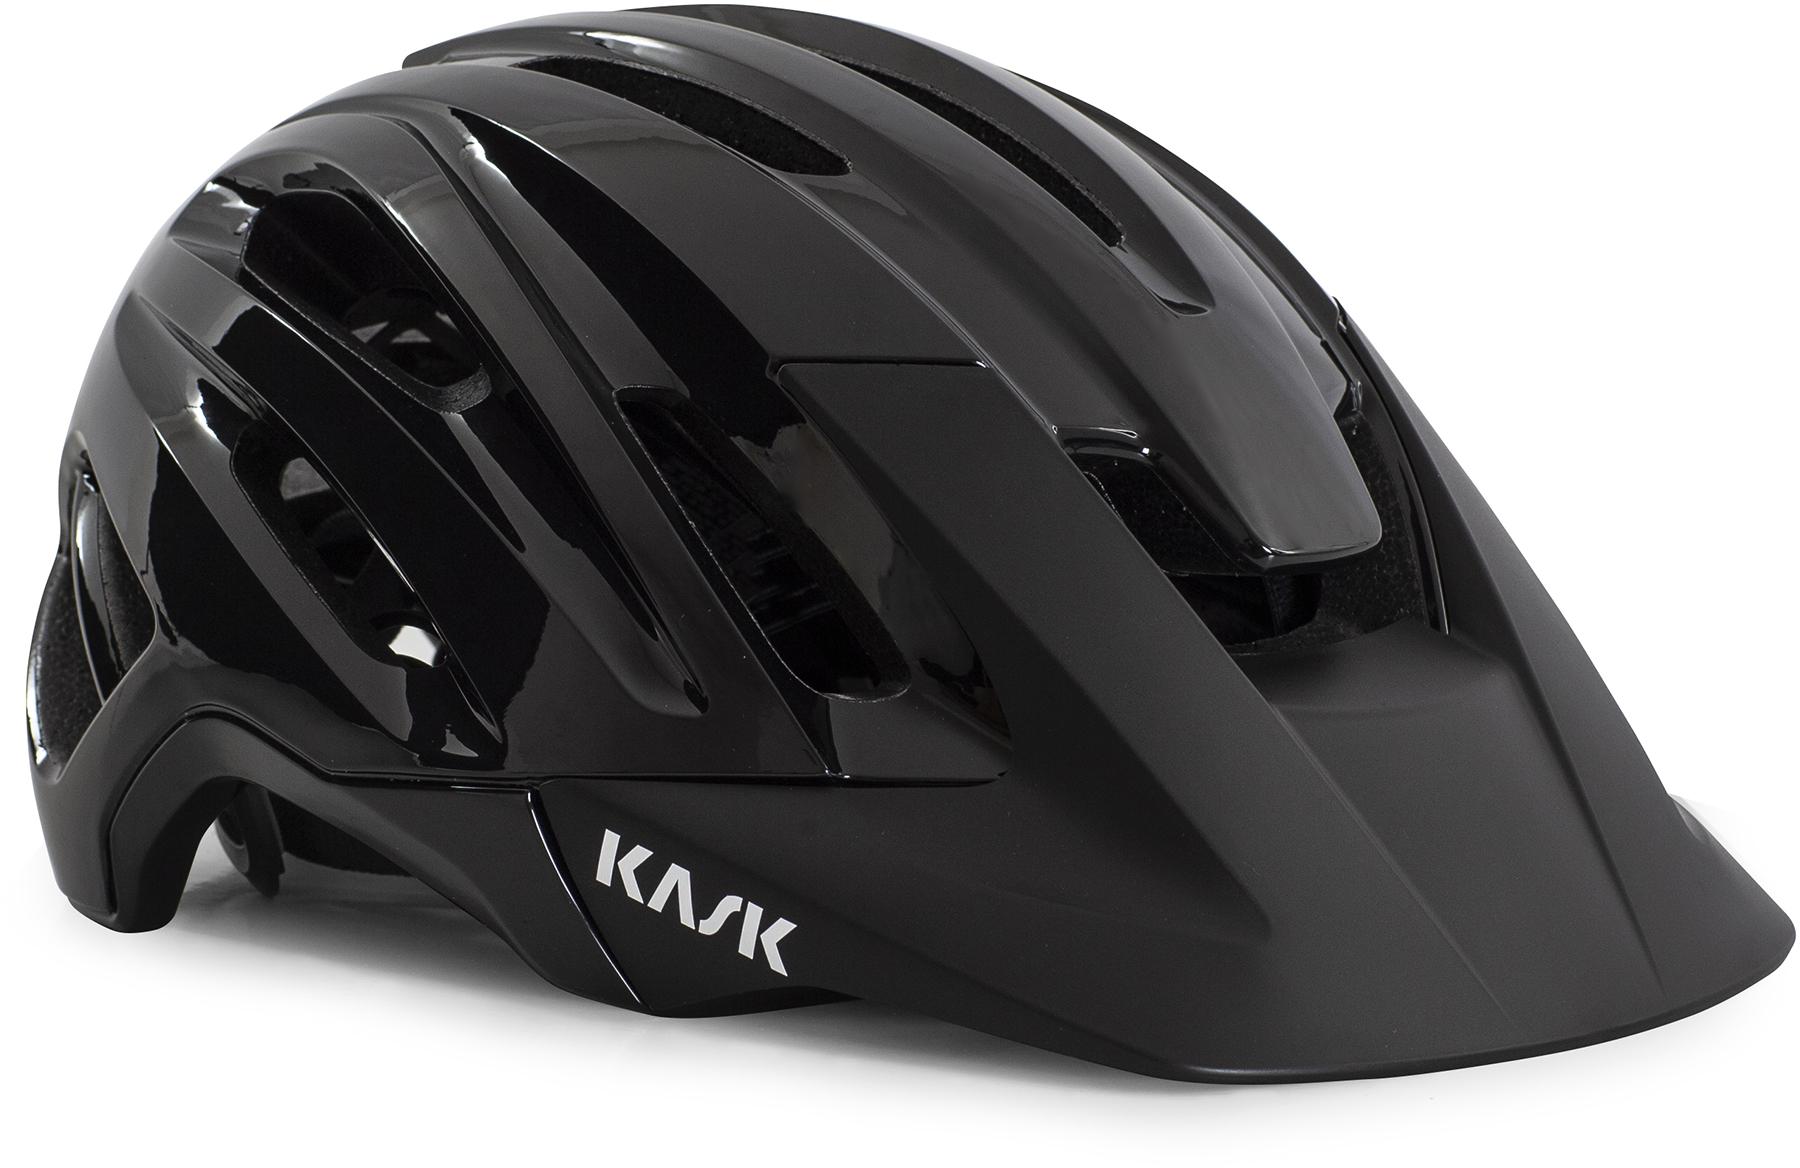 Kask Caipi Mtb Cycling Helmet (wg11) - Black